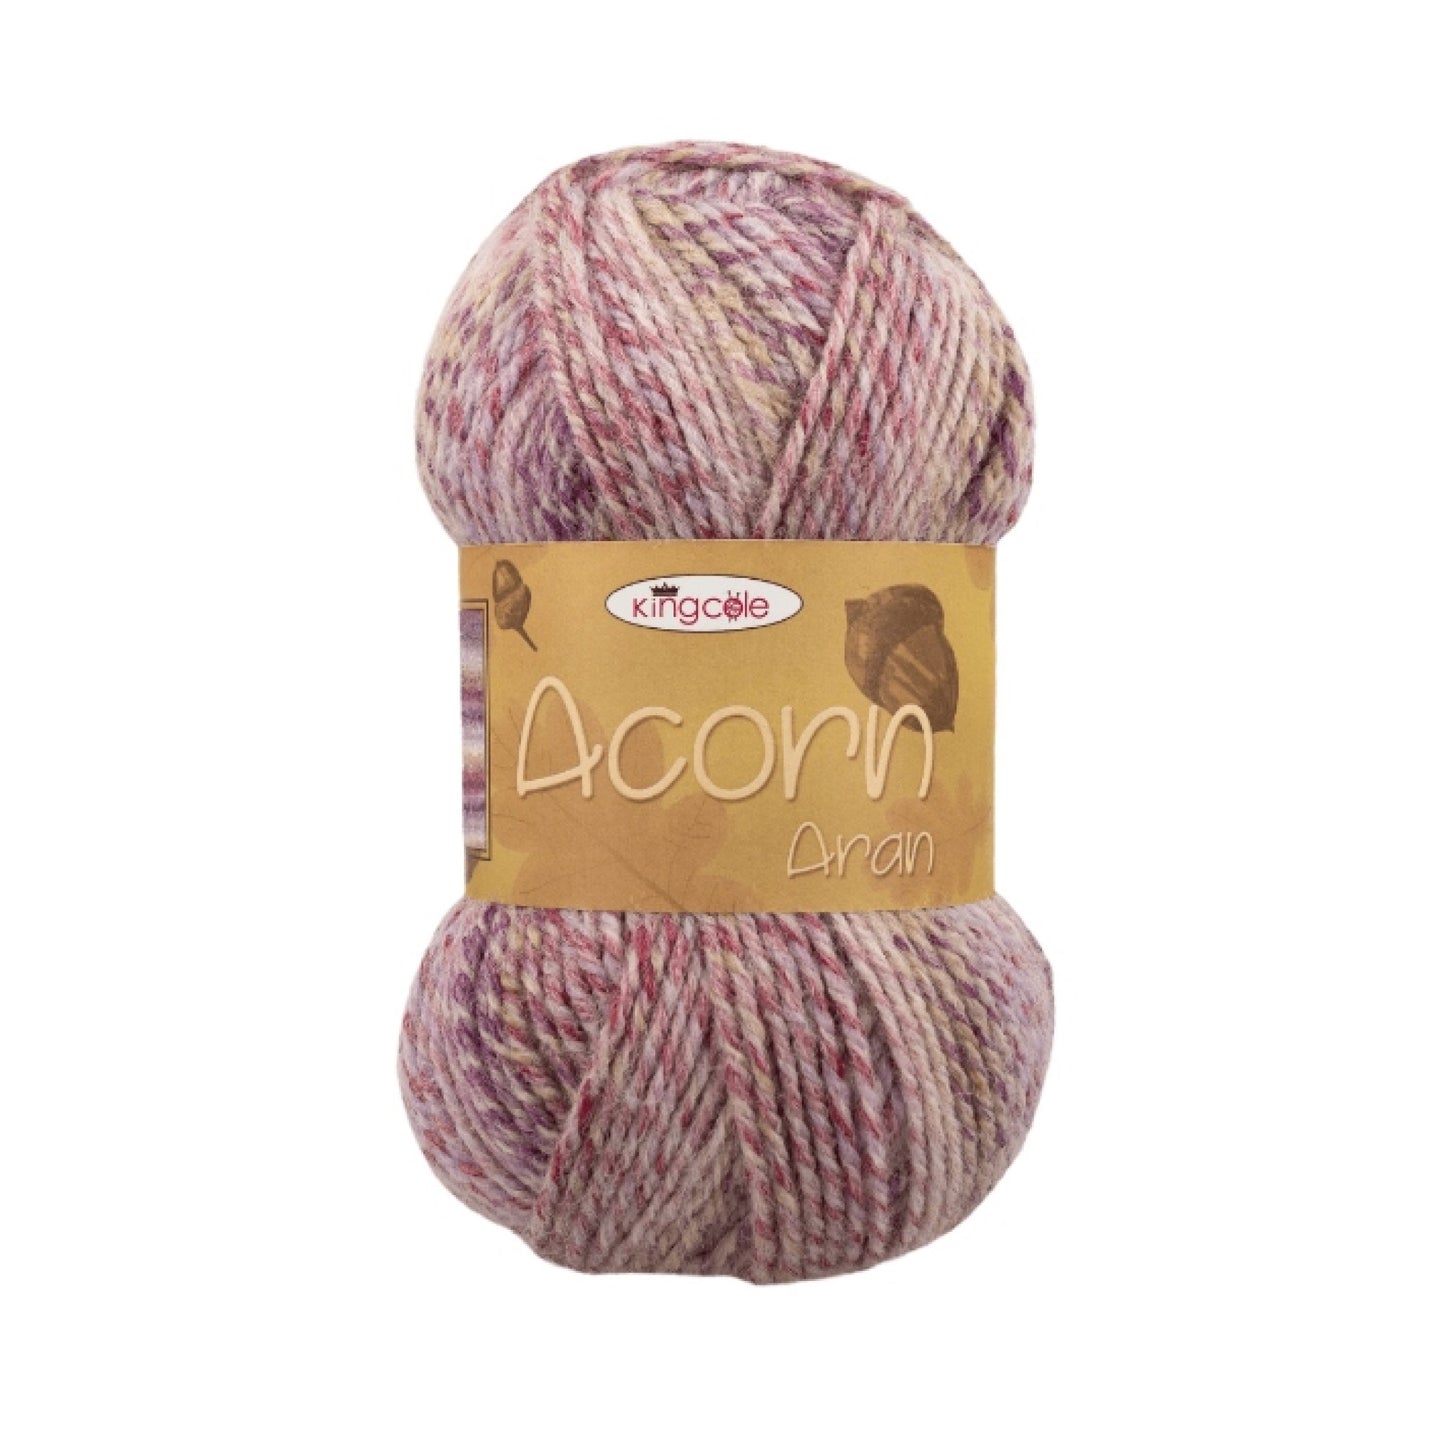 King Cole - Acorn Aran -  100g Ball - 4954 Juniper